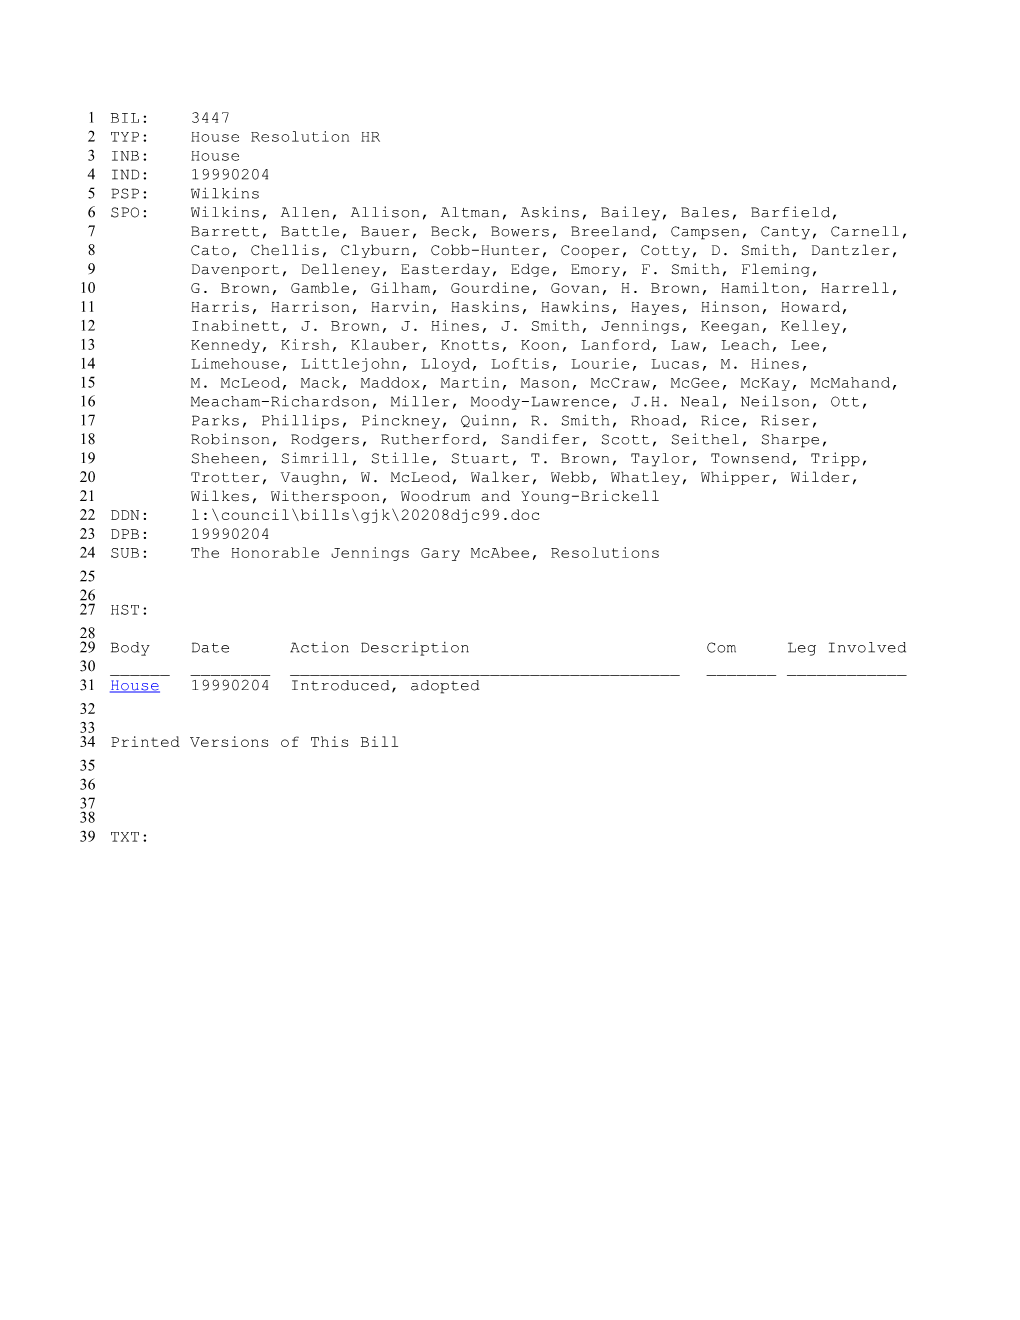 1999-2000 Bill 3447: the Honorable Jennings Gary Mcabee, Resolutions - South Carolina